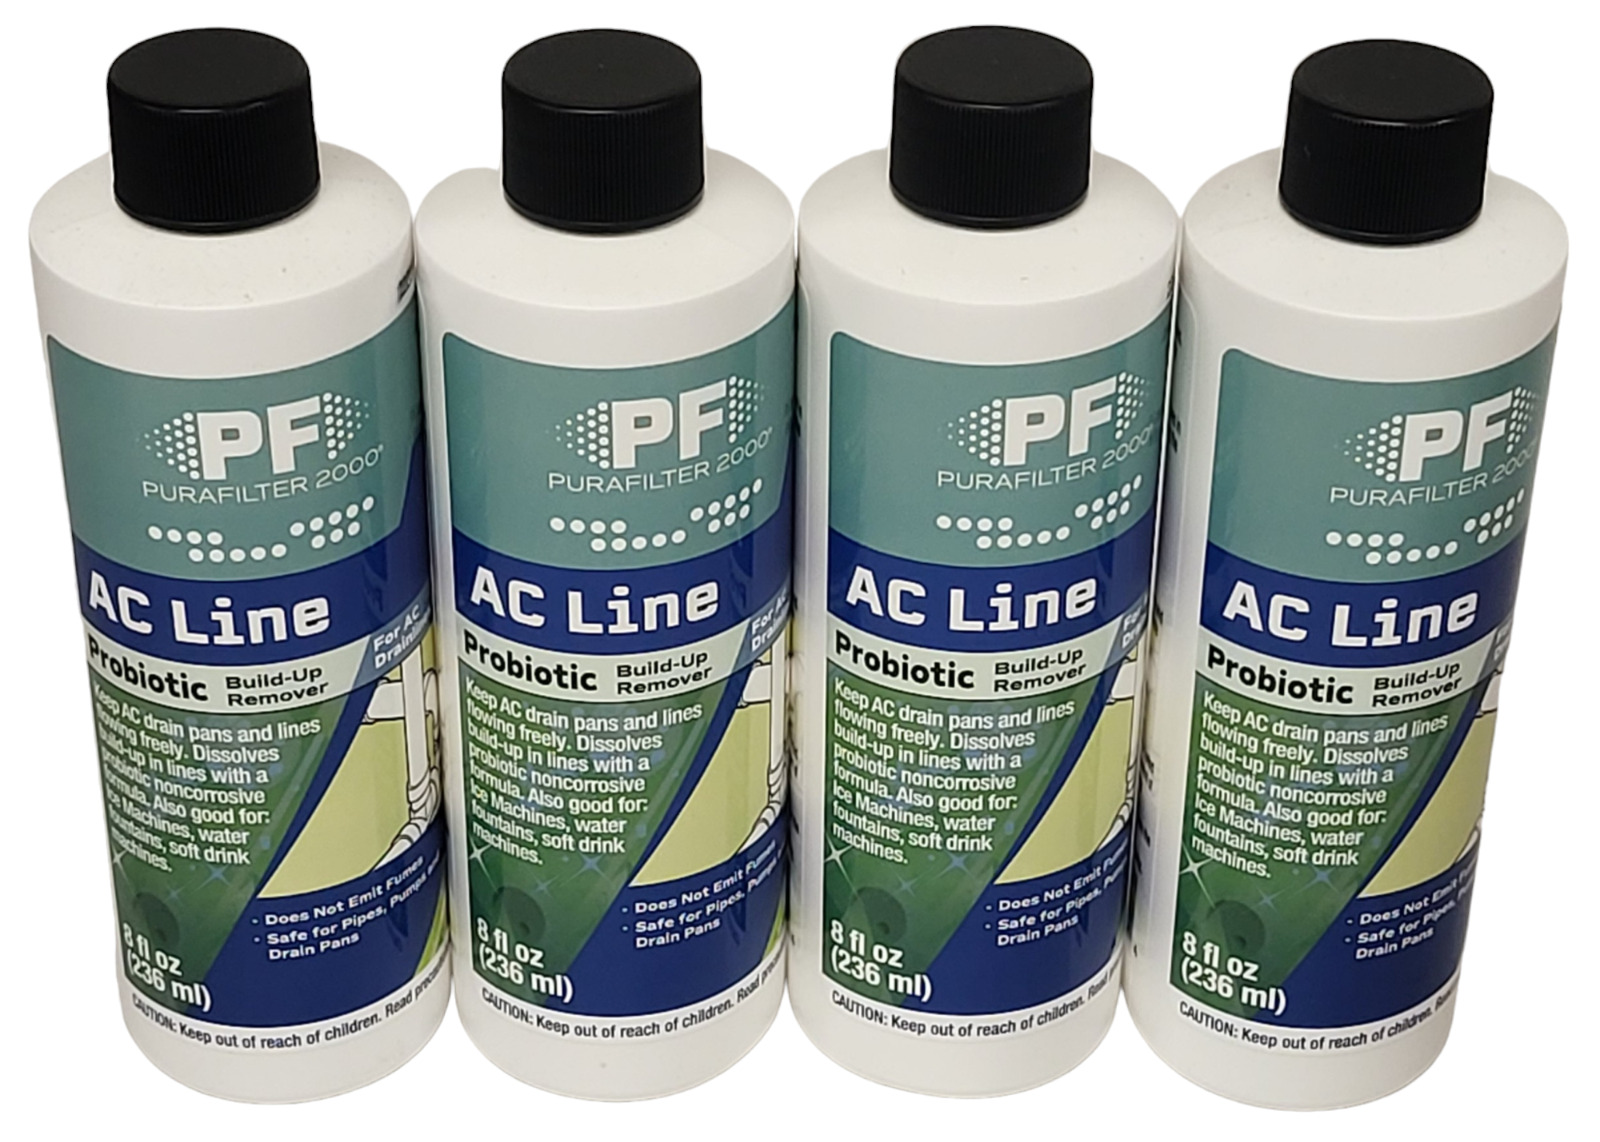 (4-Pack) Purafilter 2000 Probiotic AC Line Build-Up Remover 8-fL oz EACH